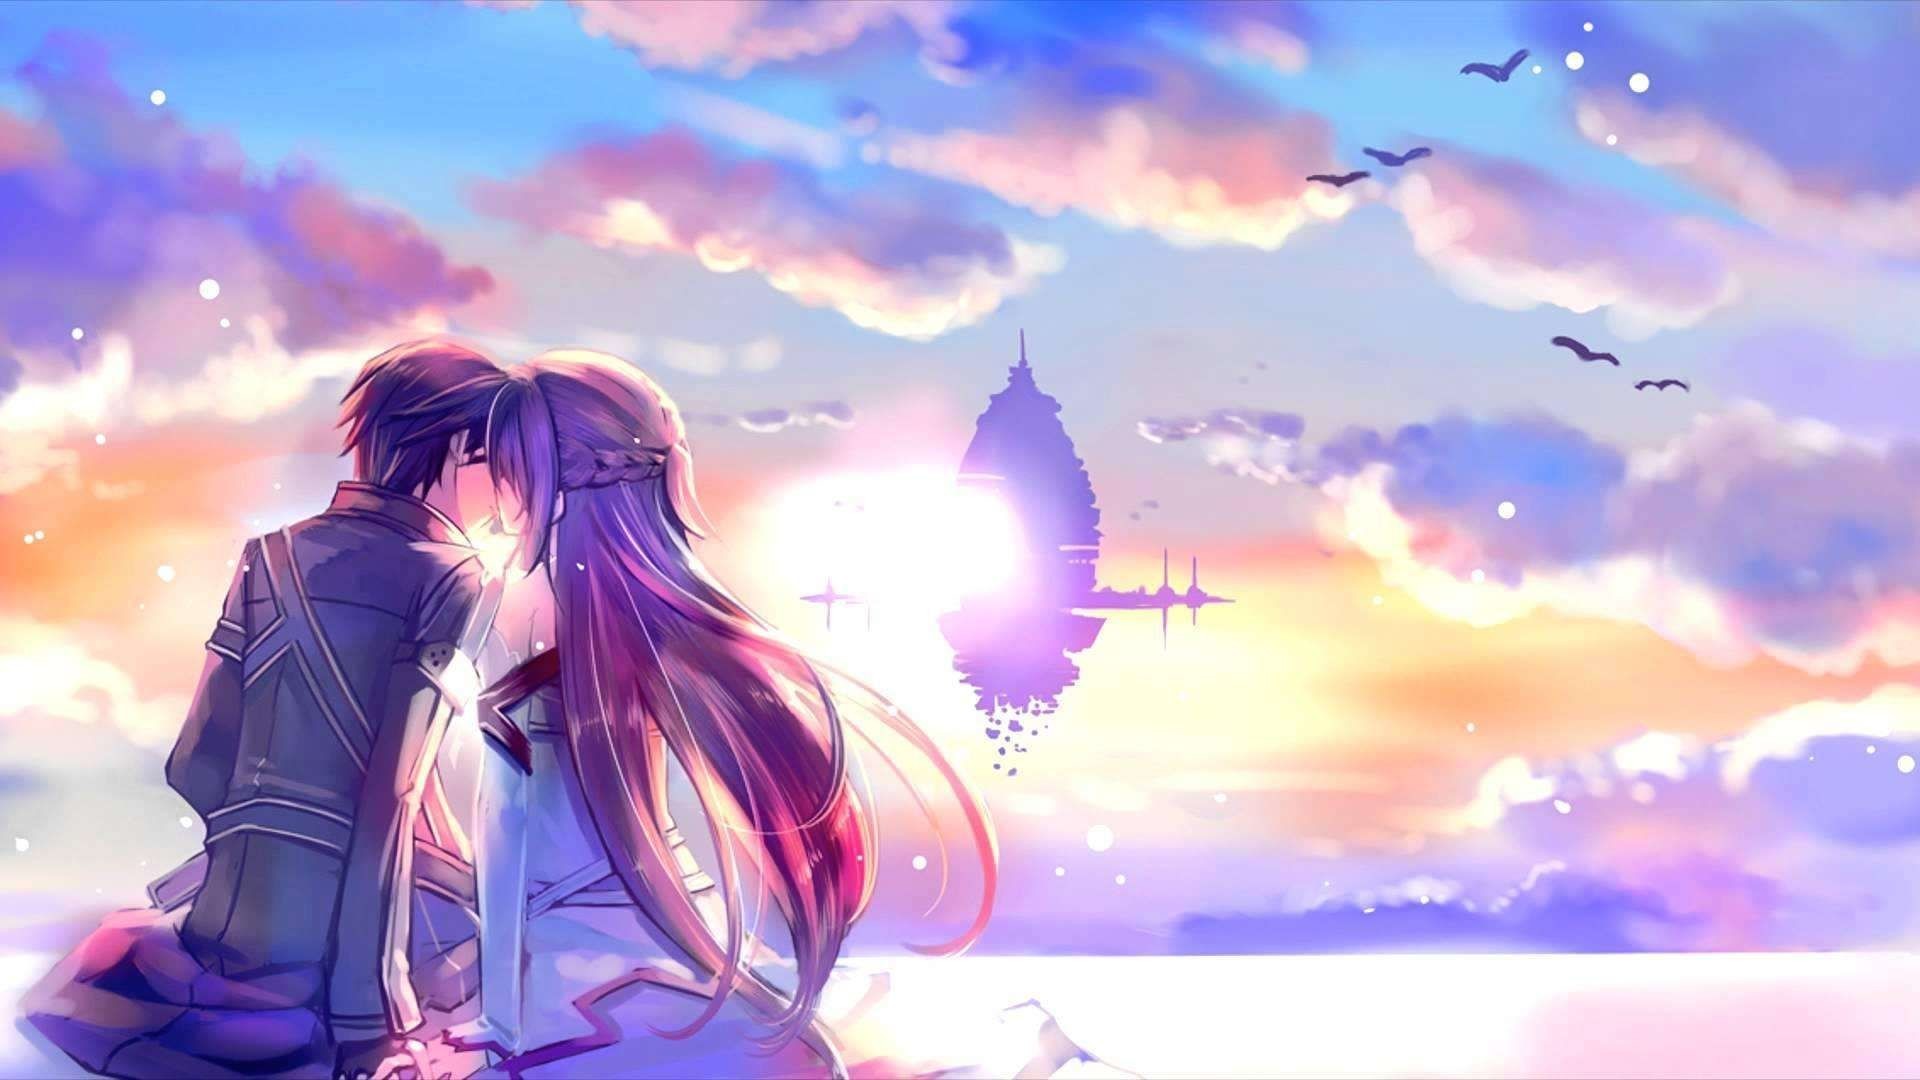 New Anime Love Wallpaper Hd 1080p At Hdwallwide - Love Wallpaper Anime - HD Wallpaper 